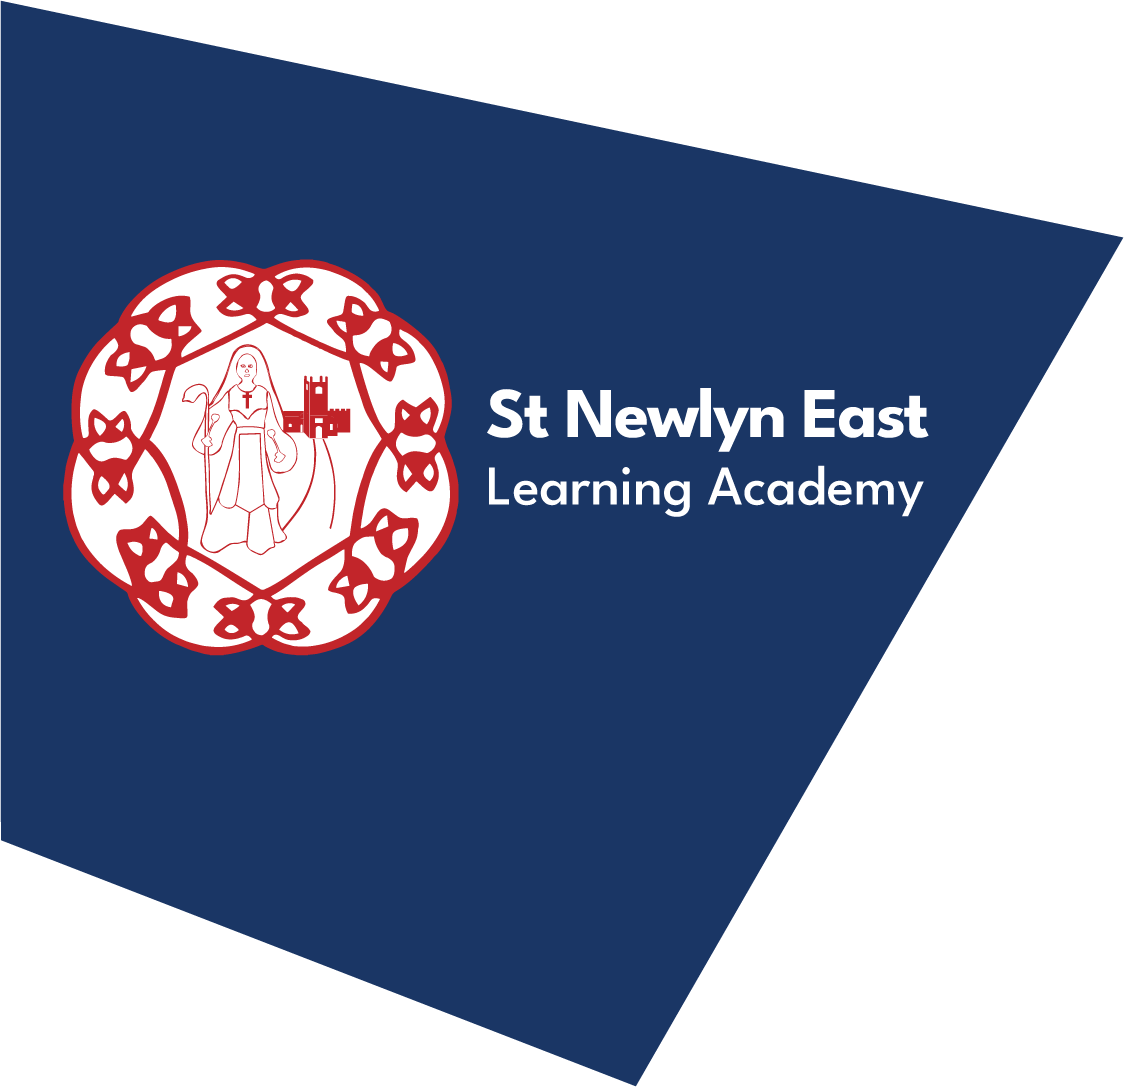 St Newlyn East Learning Academy logo